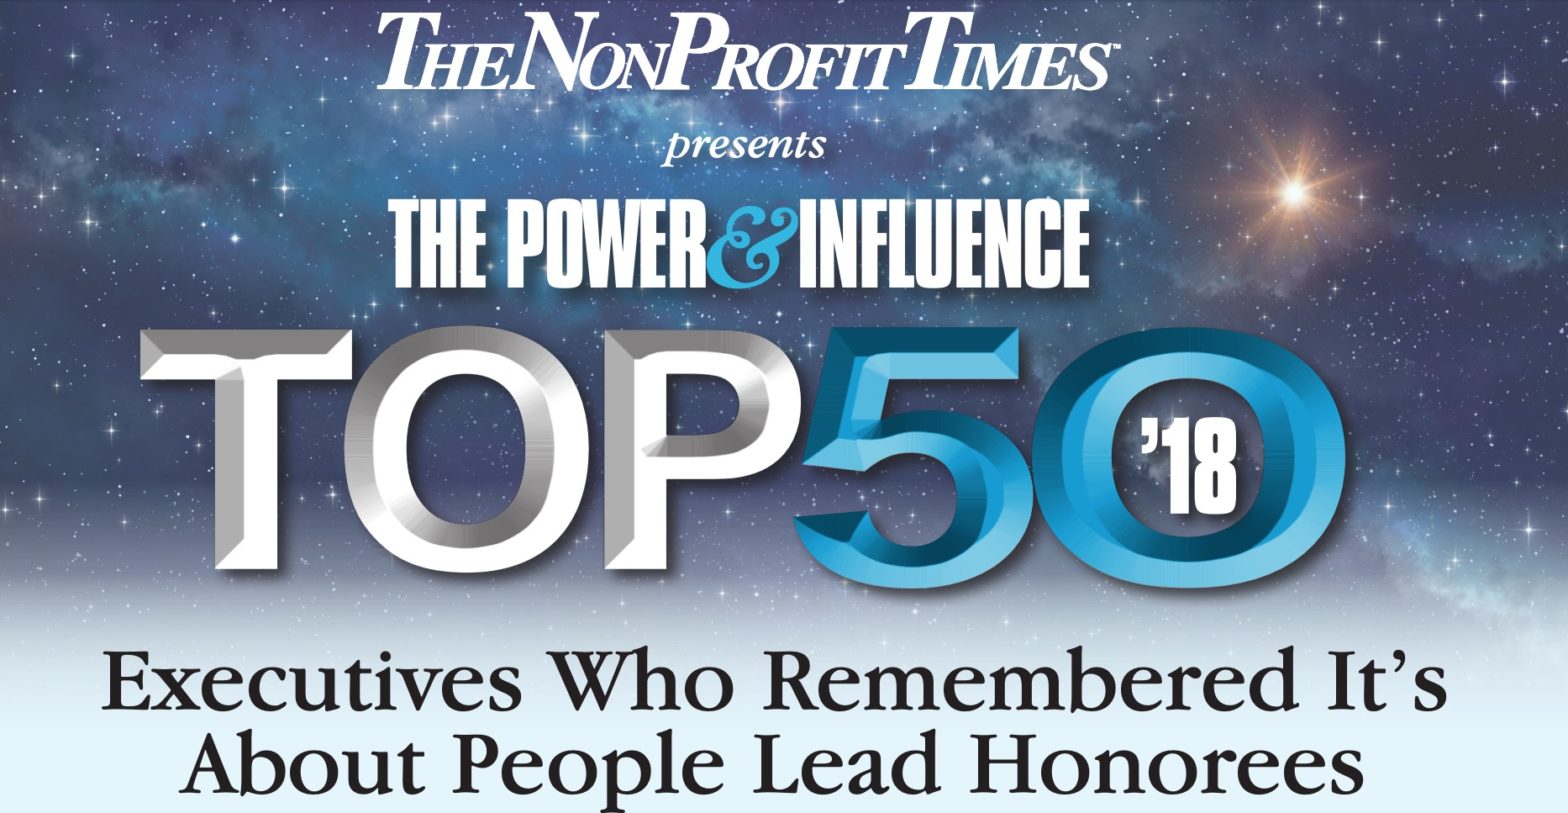 npt-power-influence-top50-2019